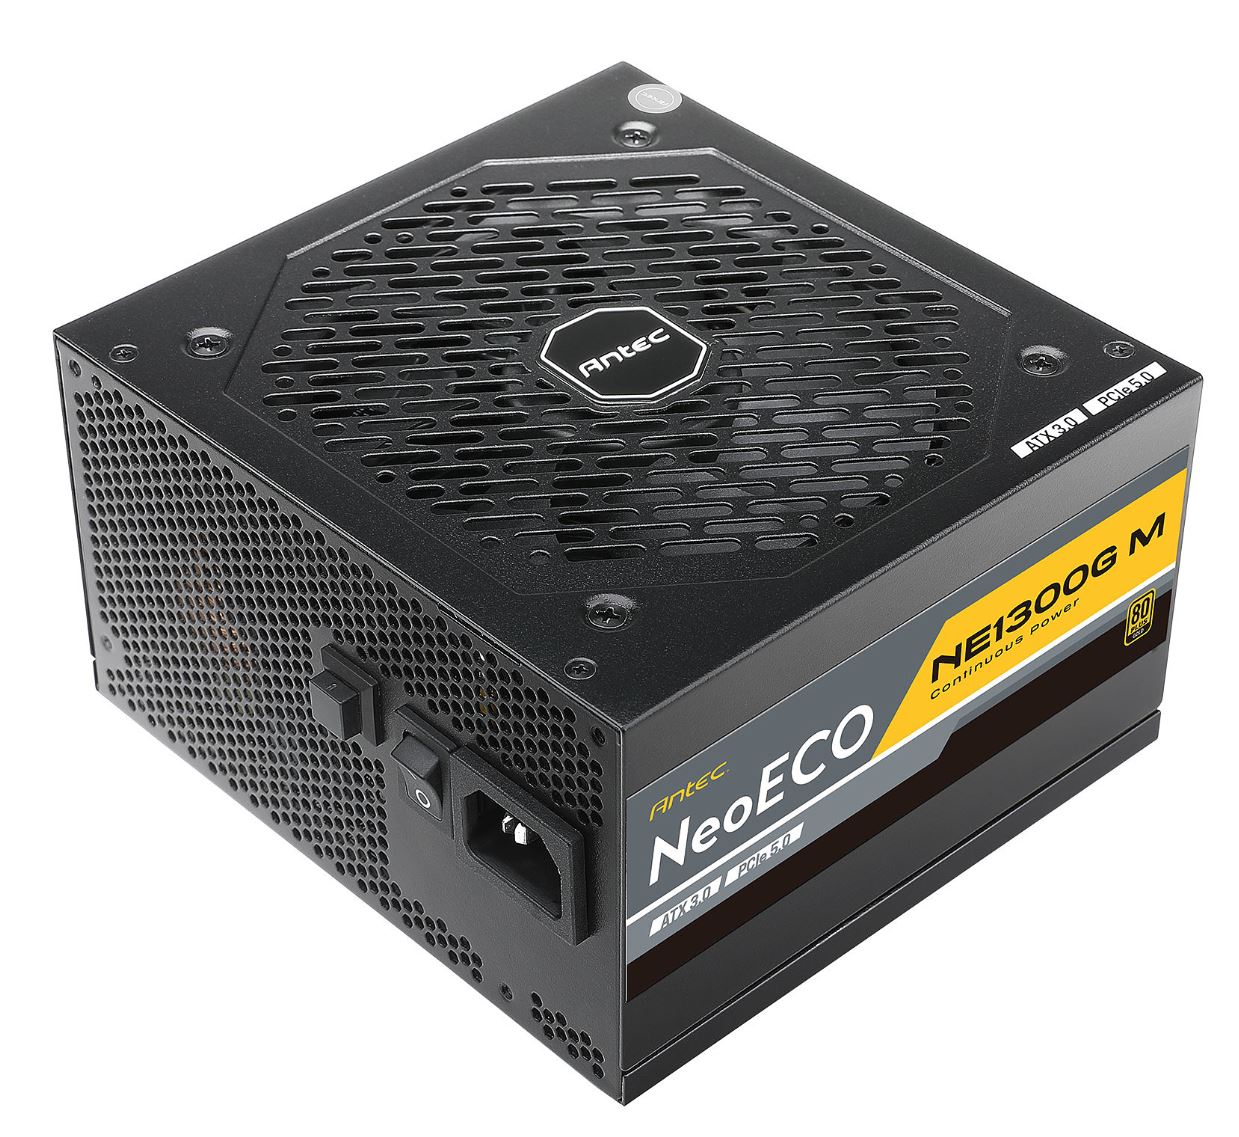 Antec NE 1300w 80+ Gold, Fully-Modular, ATX 3.0, PCI-E 5.0, 12CM FDB Fan, Japanese Caps, Compact ATX Silent Server Grade Power Supply, PSU, 10 wty